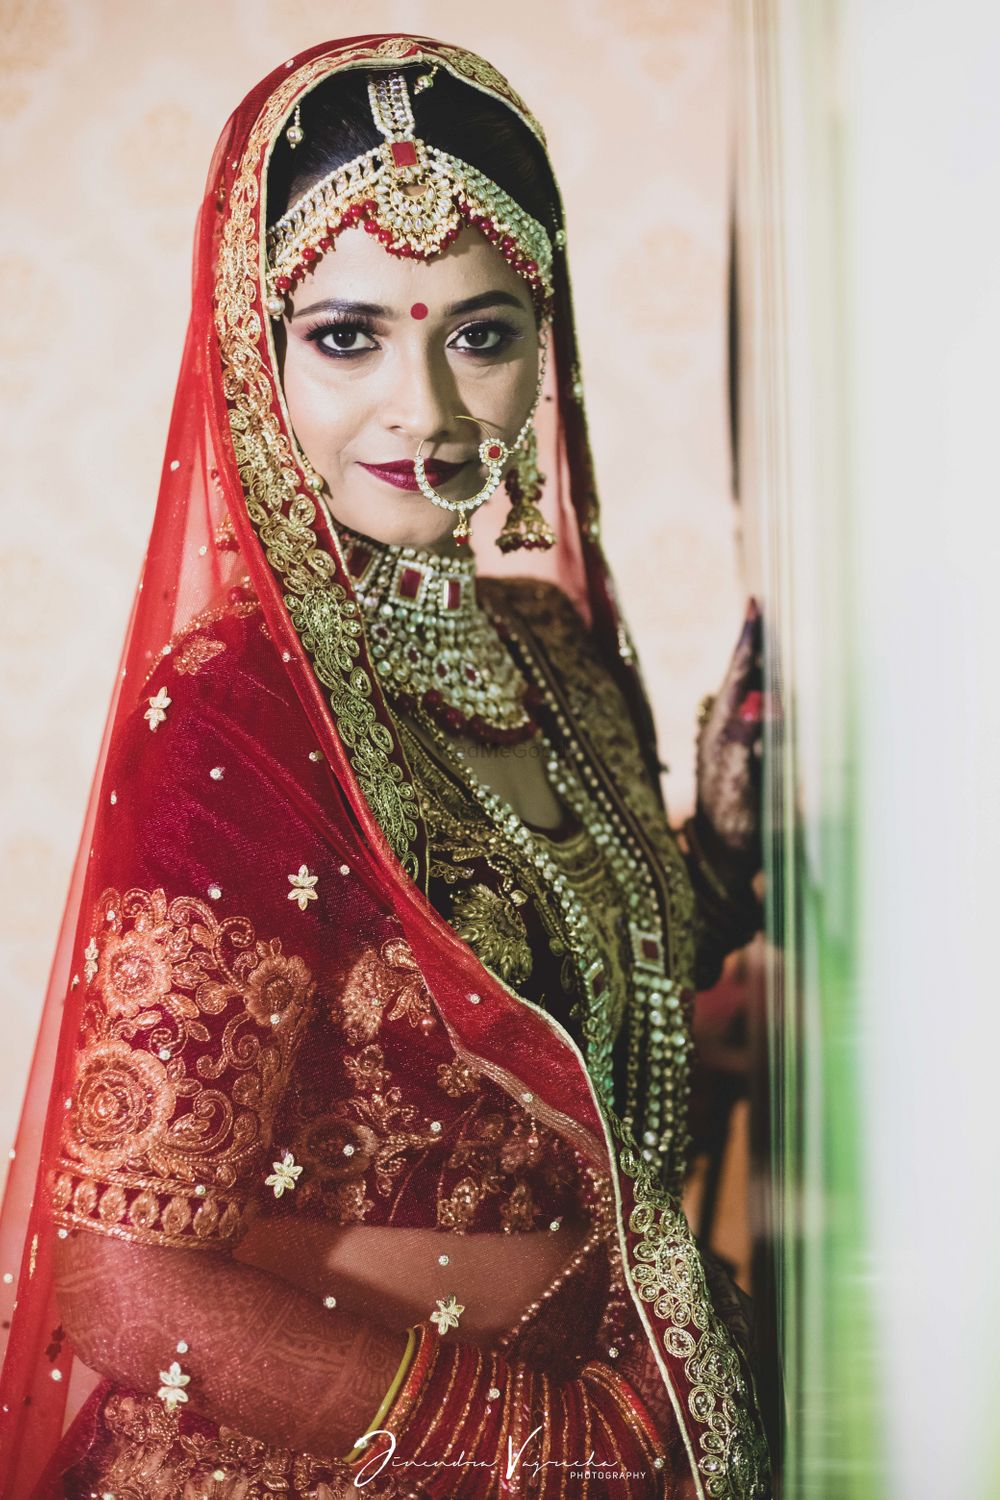 Photo From Udit Ji Rajput Wedding - By Jinendra Vagrecha Photography